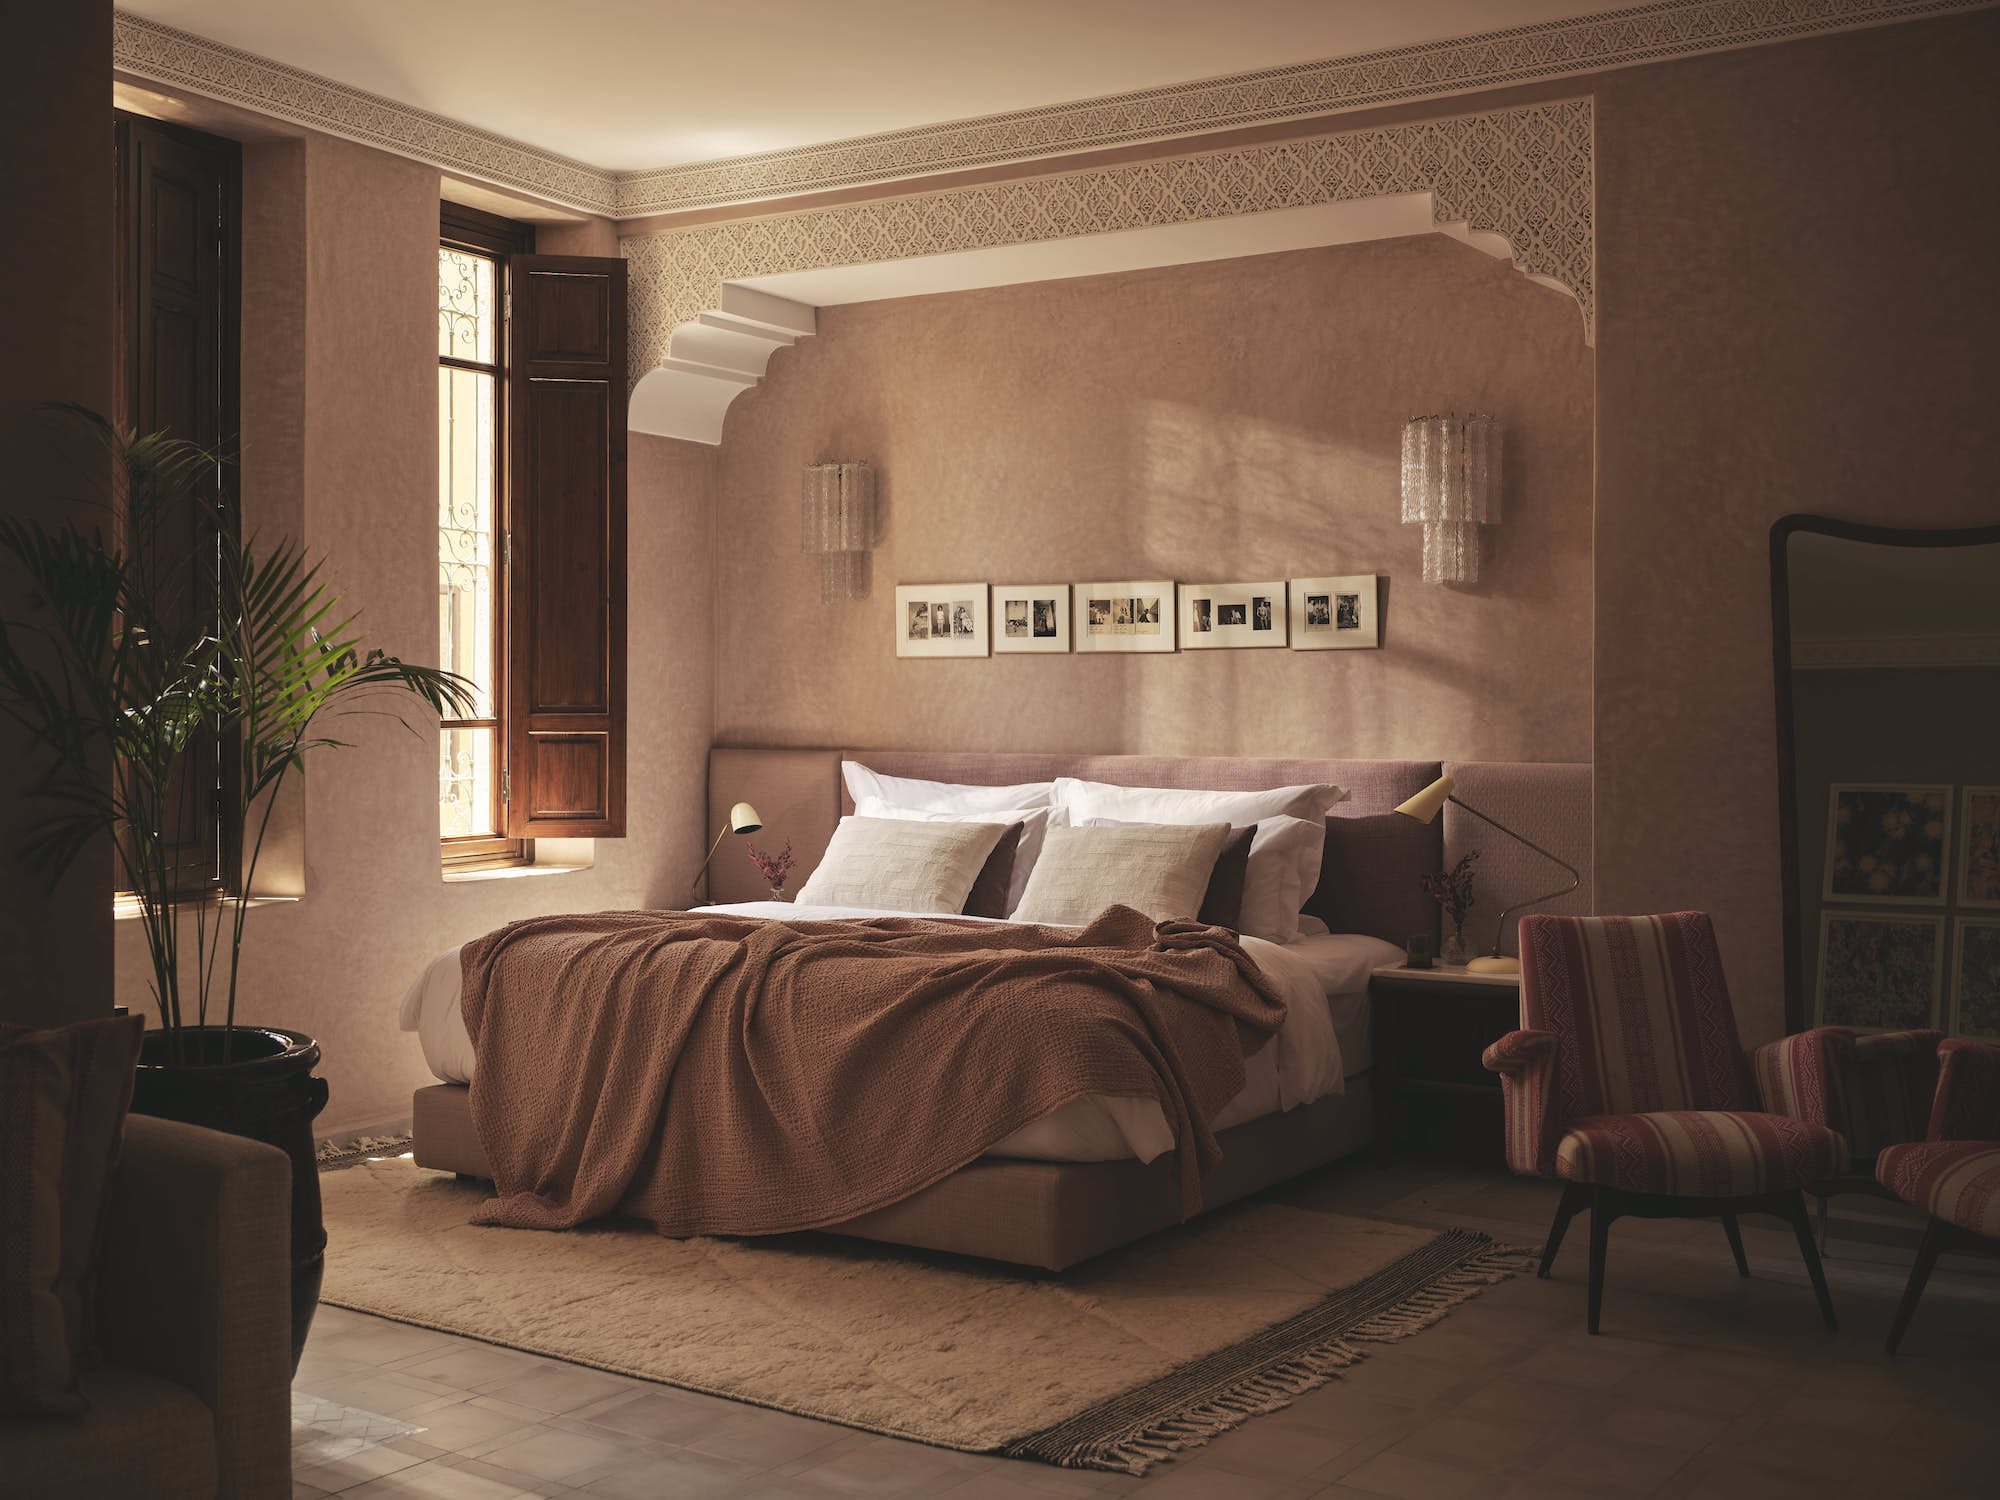 Yves bedroom at Izza hotel in Marrakesh - Effect Magazine